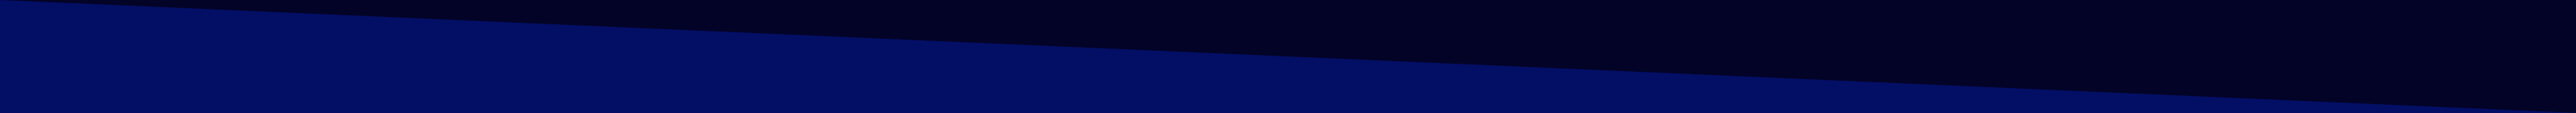 Dark blue to light blue page divider